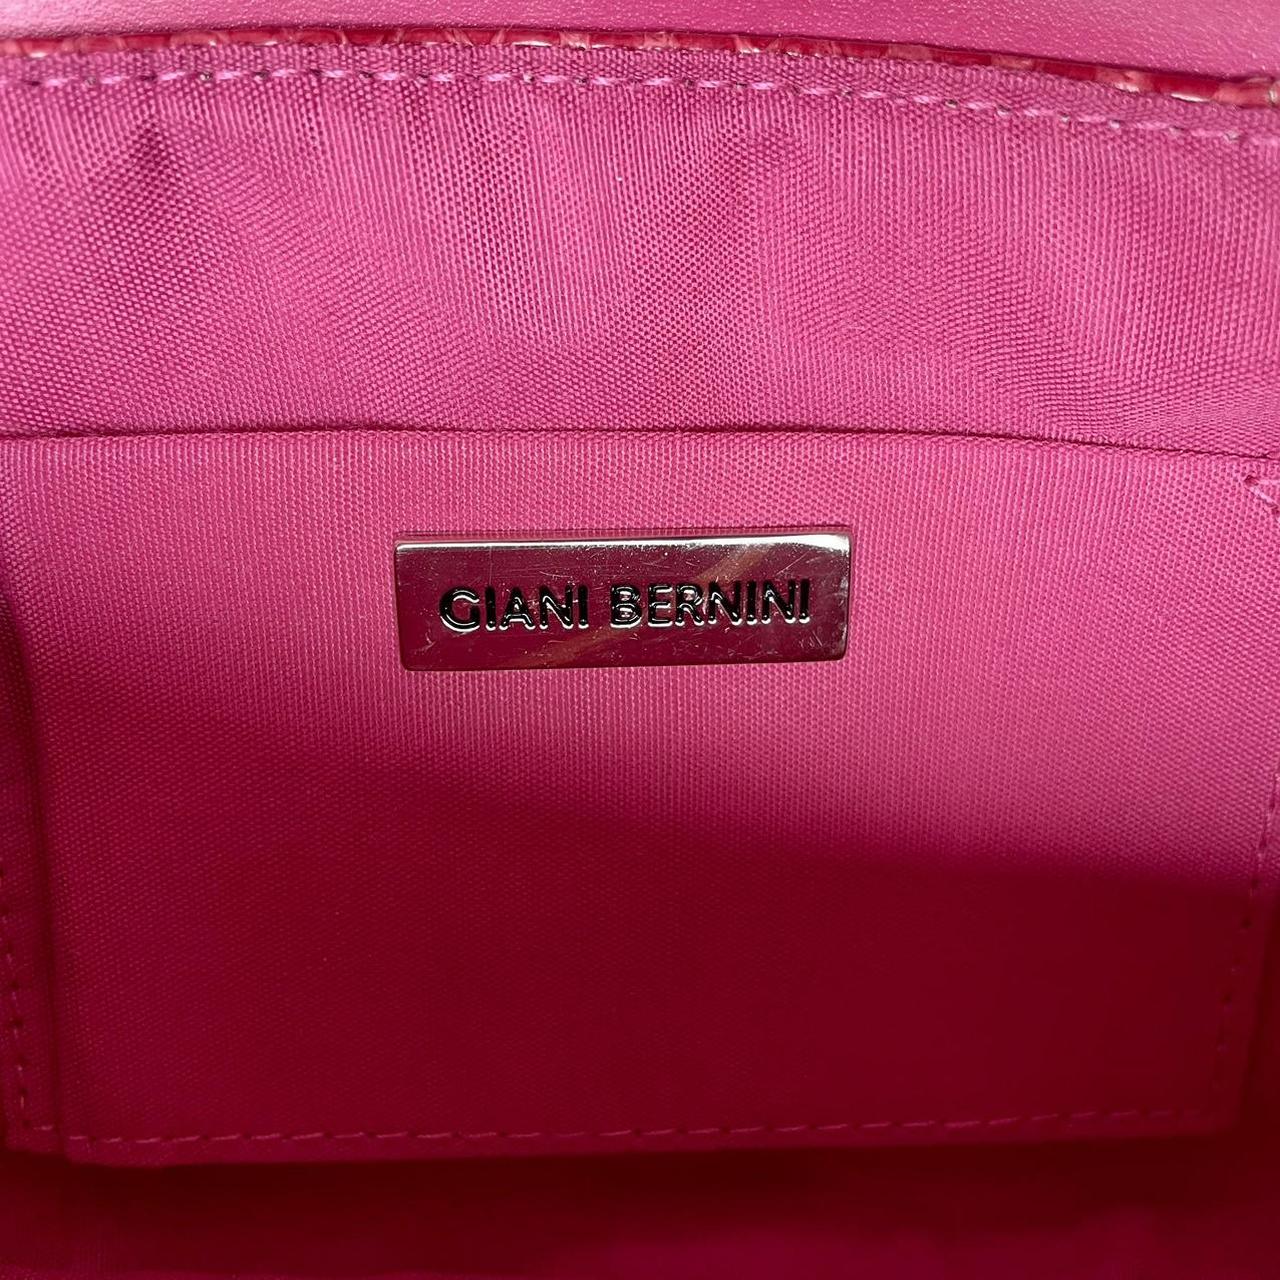 Adorable 90s vintage Giani Bernini red leather purse - Depop